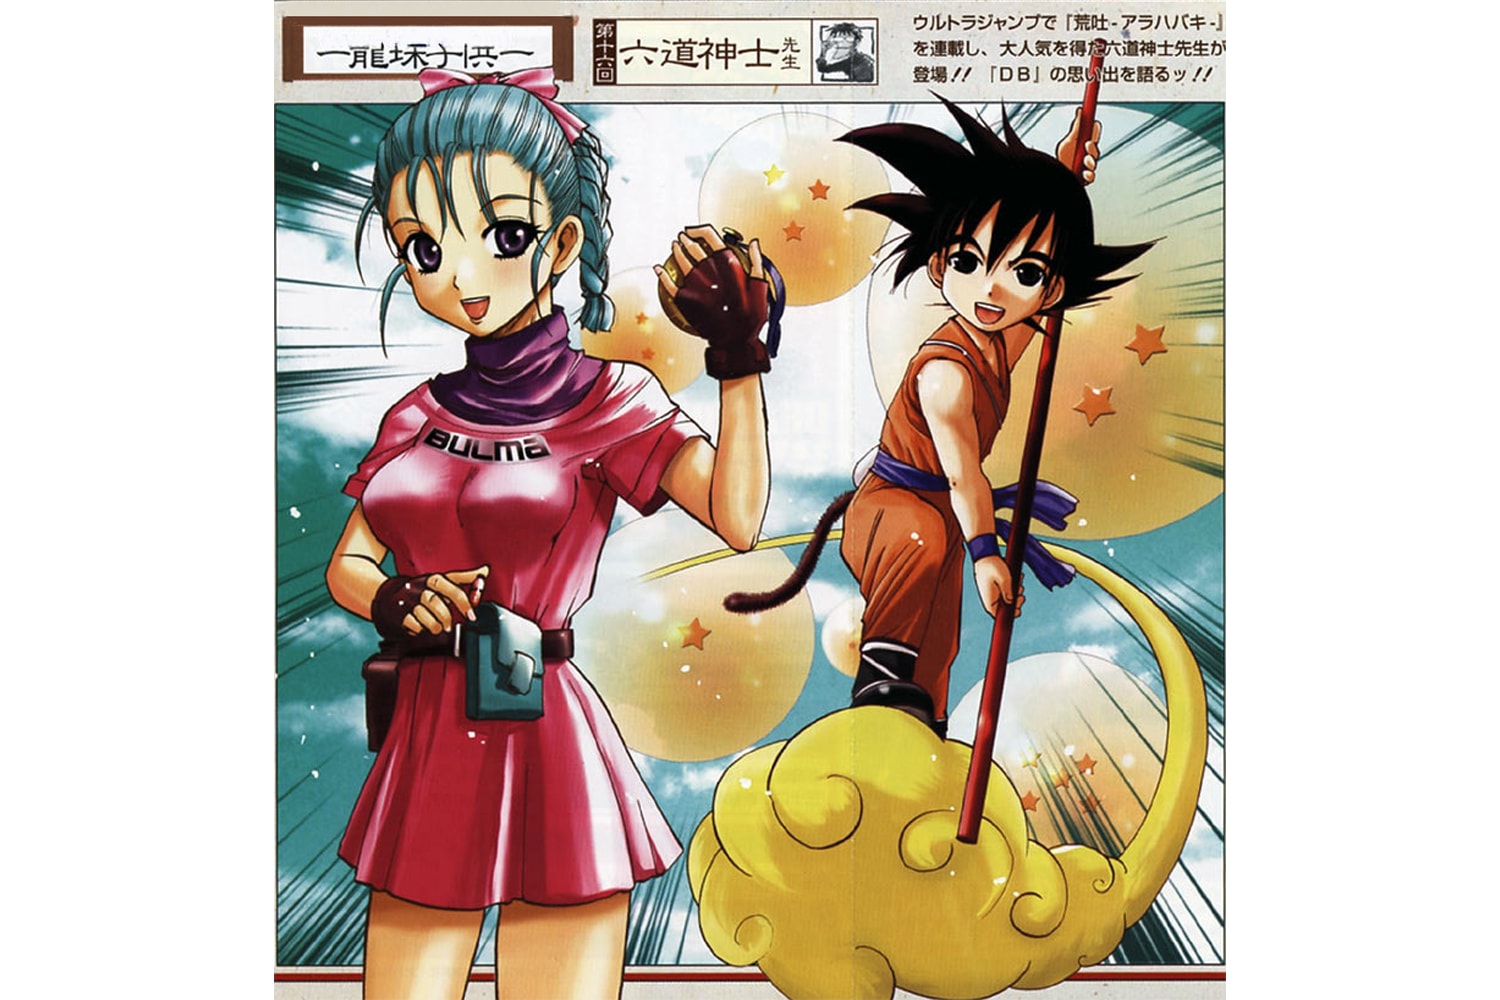 Best 'Dragon Ball' Drawings by Manga Artists | HYPEBEAST